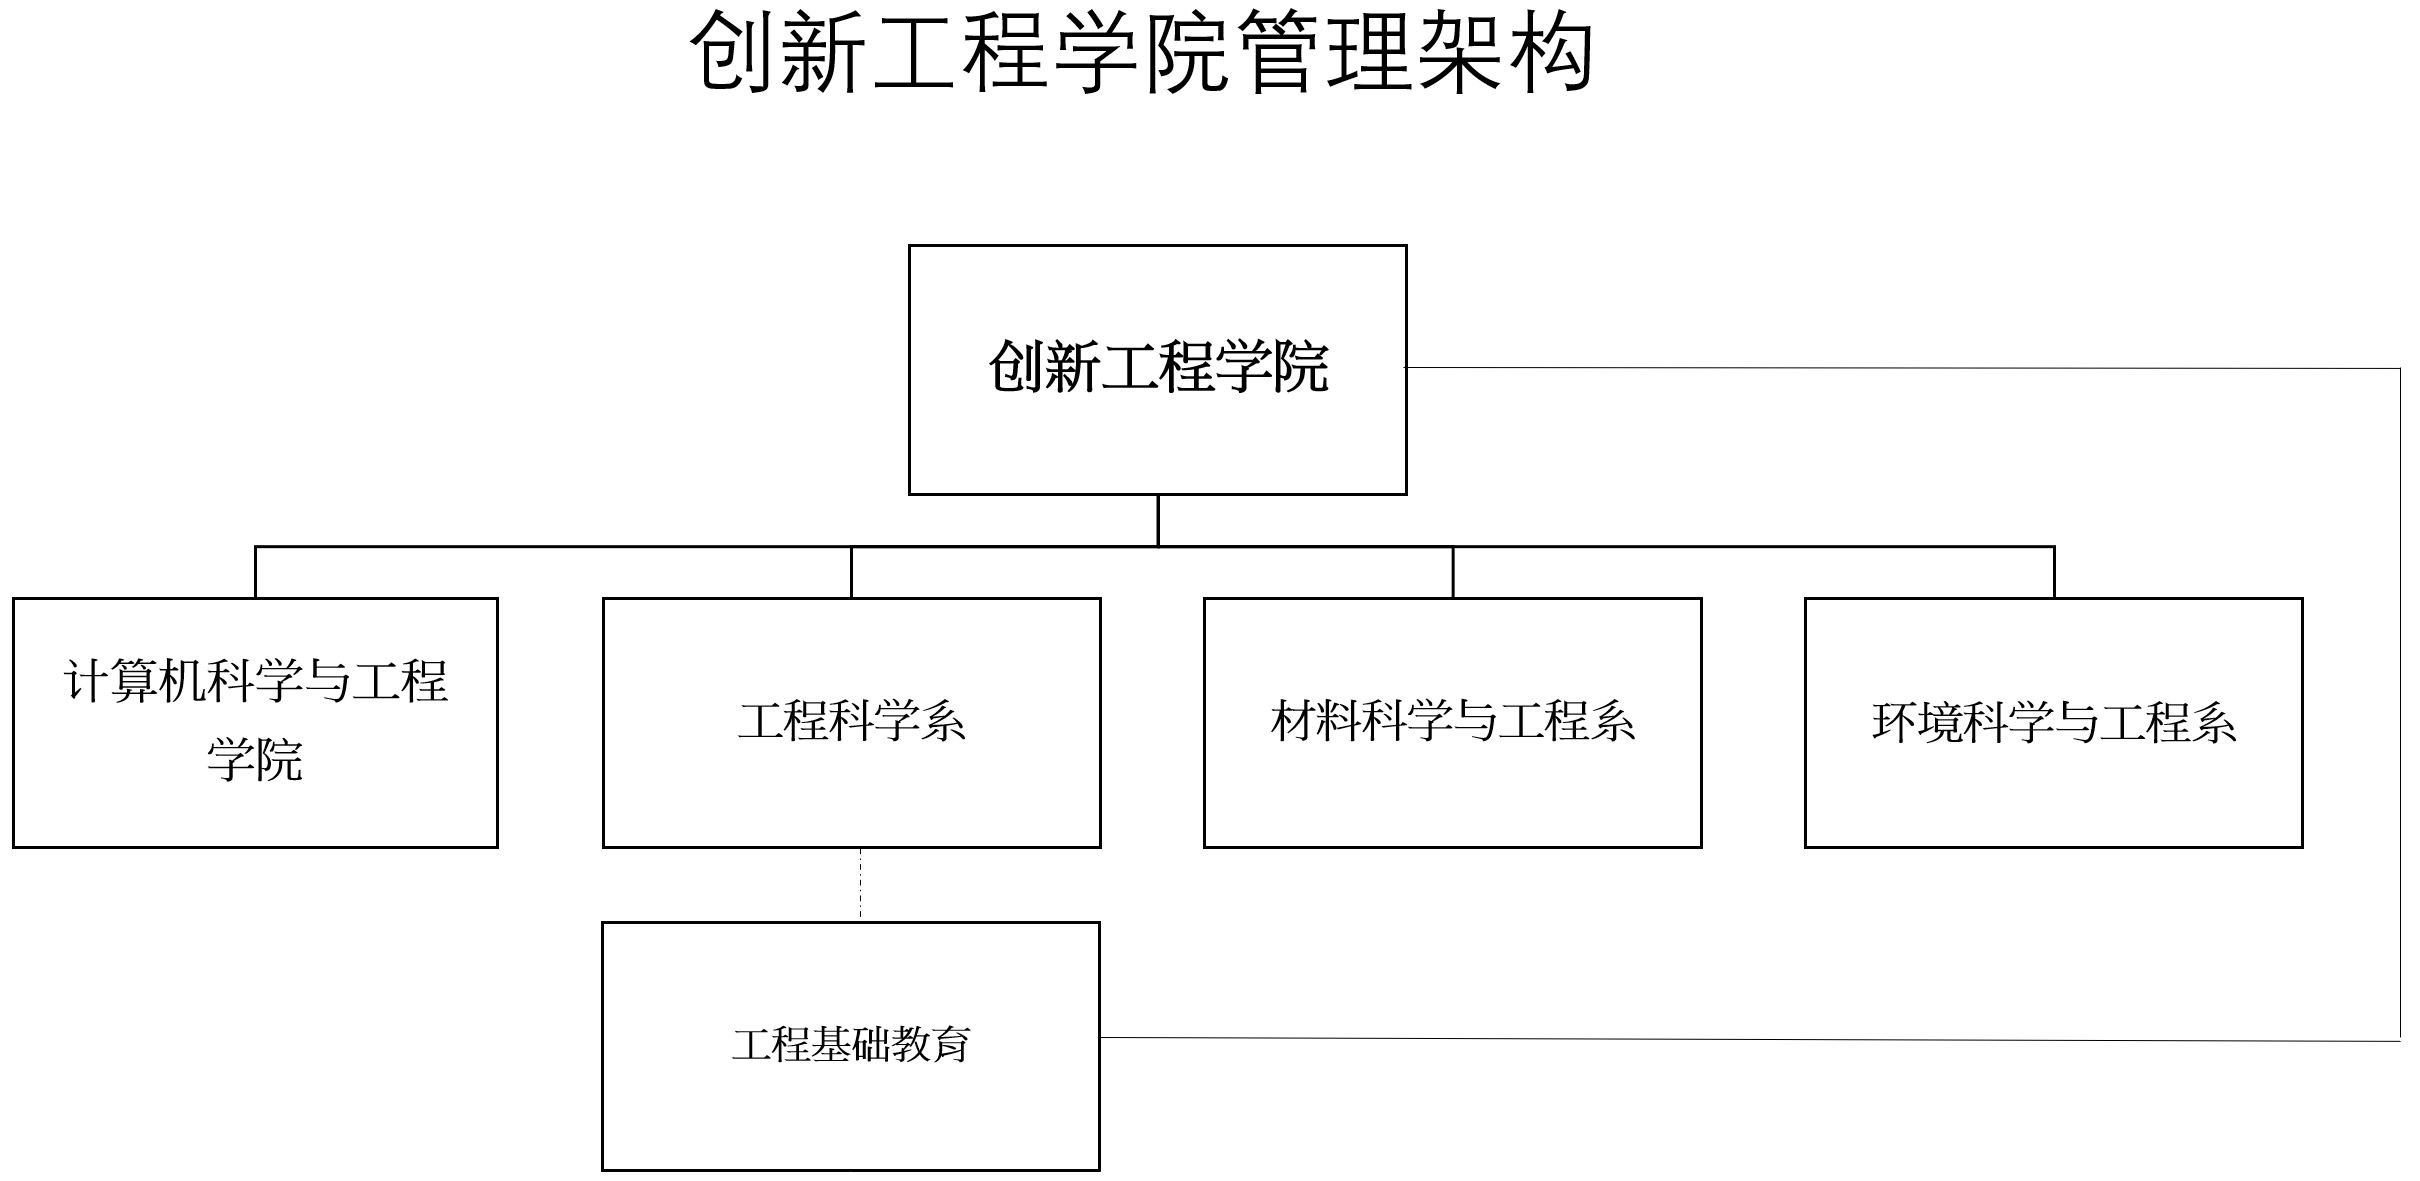 Managment structure of FIE cn 3